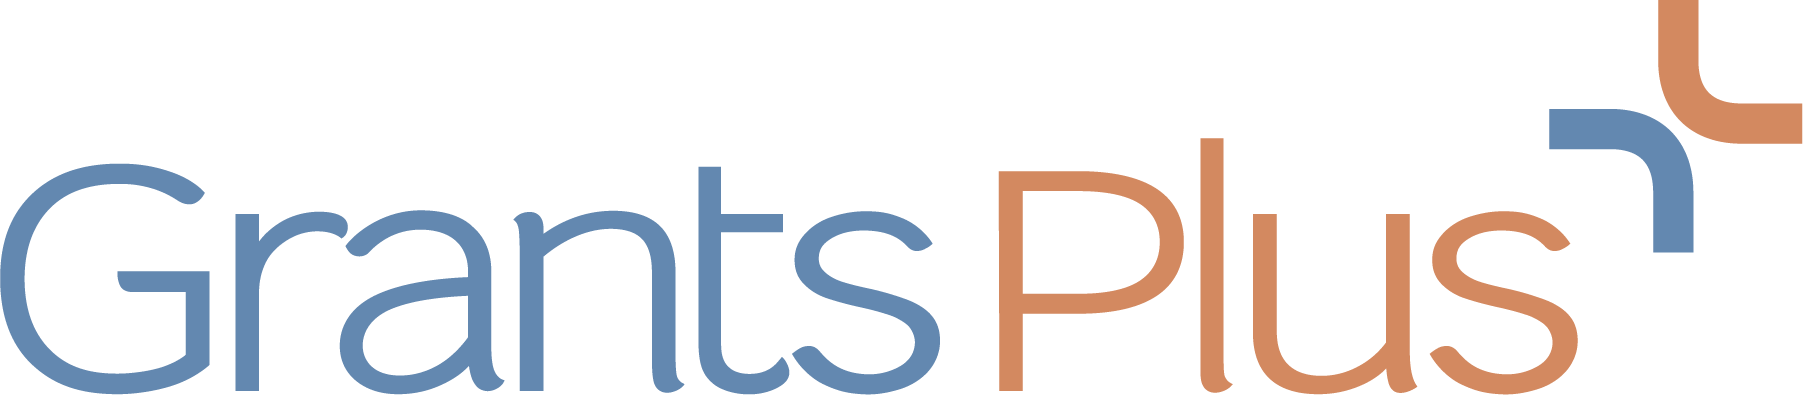 Grants Plus logo